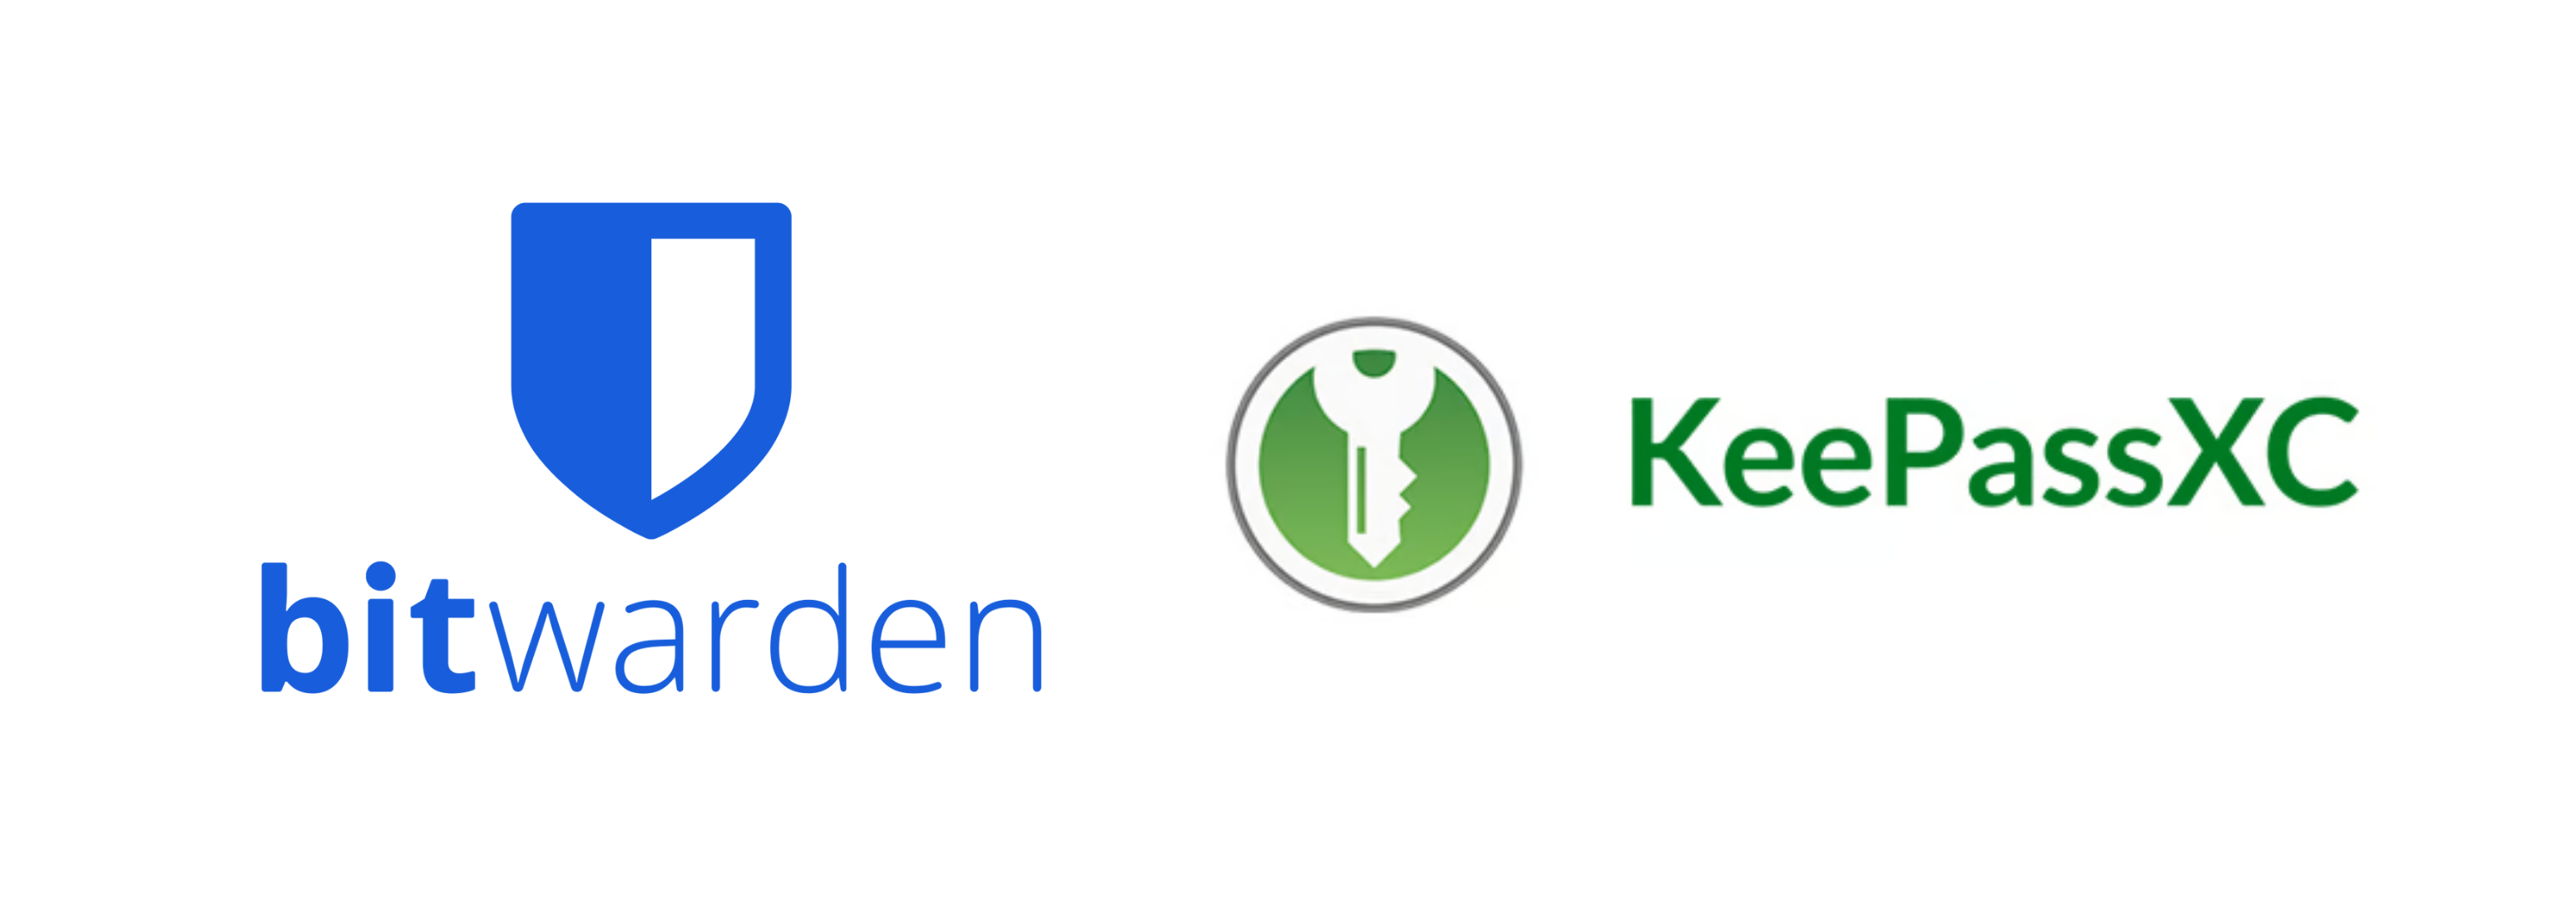 Logos of password managers: Bitwarden and KeePassVC